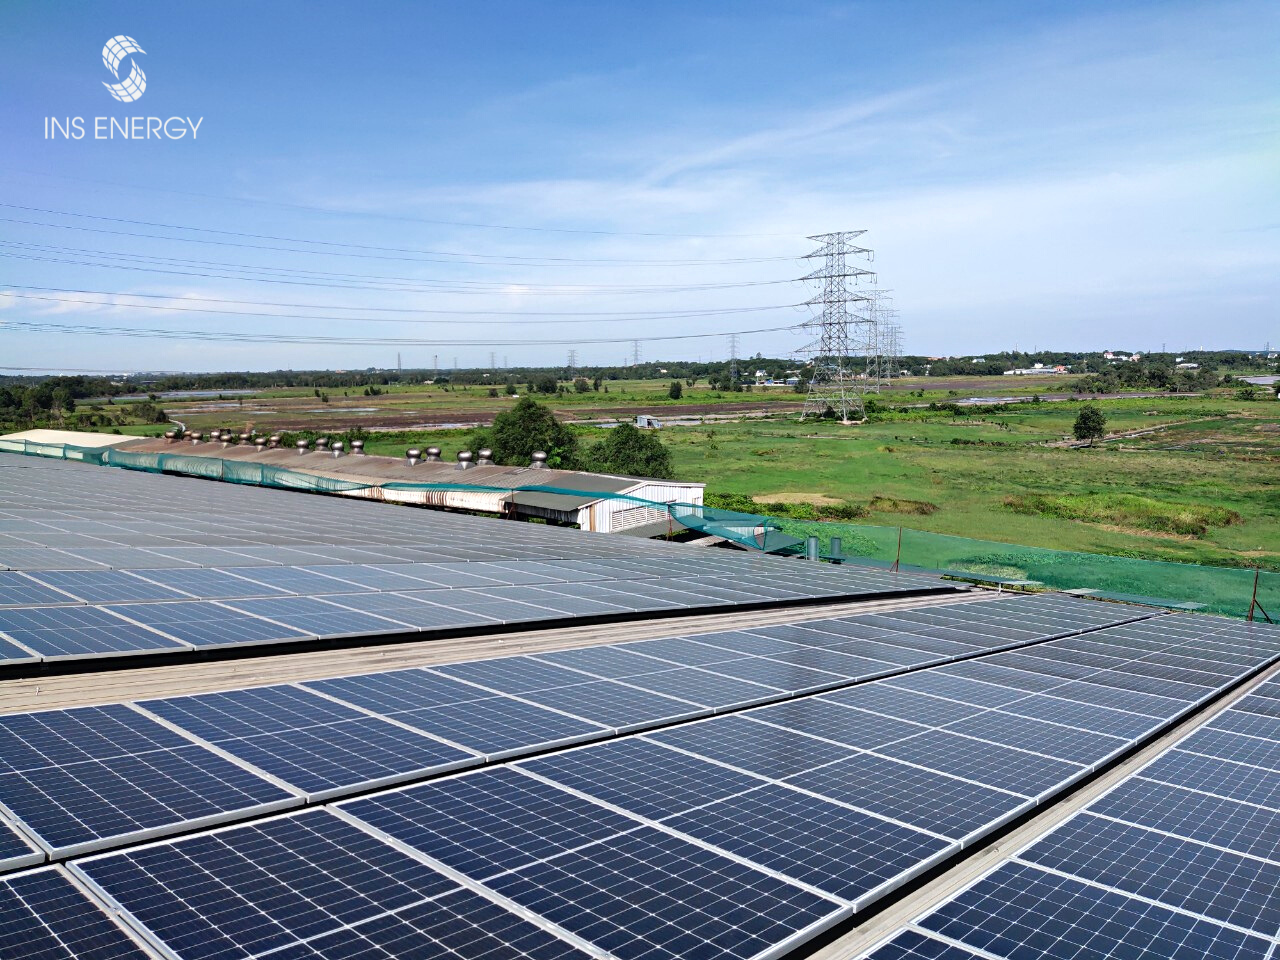 Vietnam's renewable energy development potential